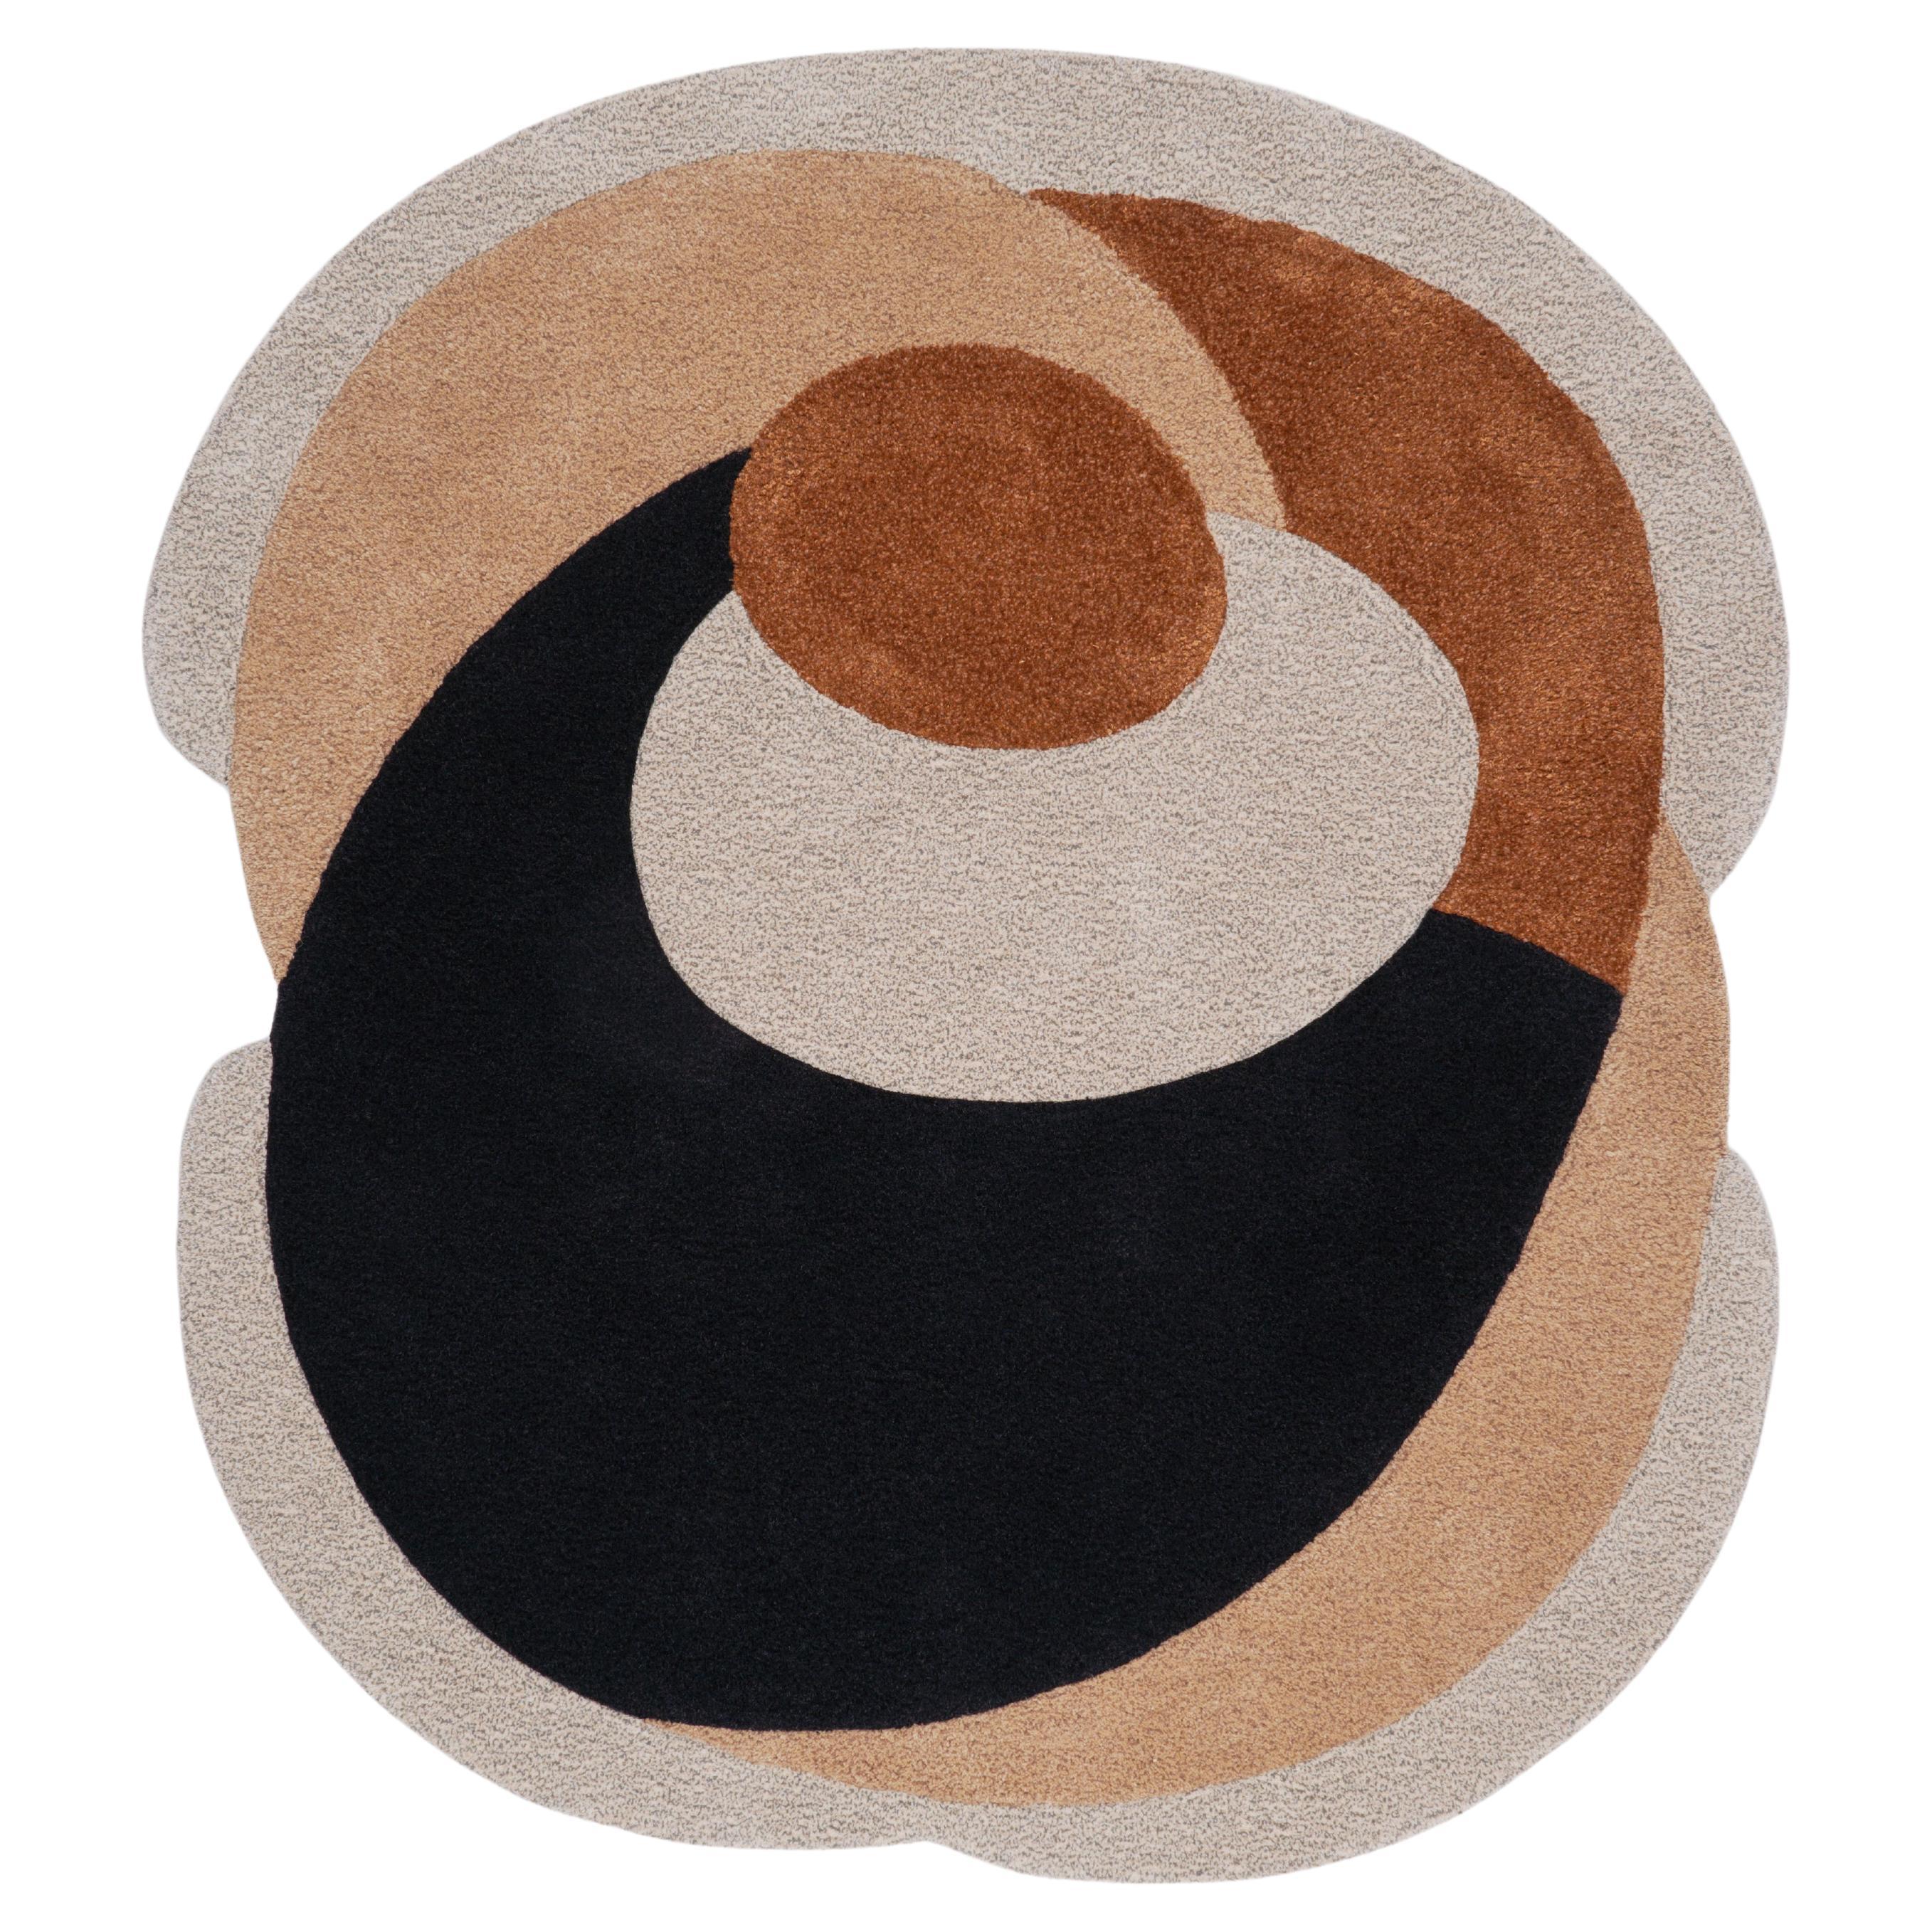 Ki no4 Rug by Studio Marmi / Hand tufted wool contemporary rug For Sale